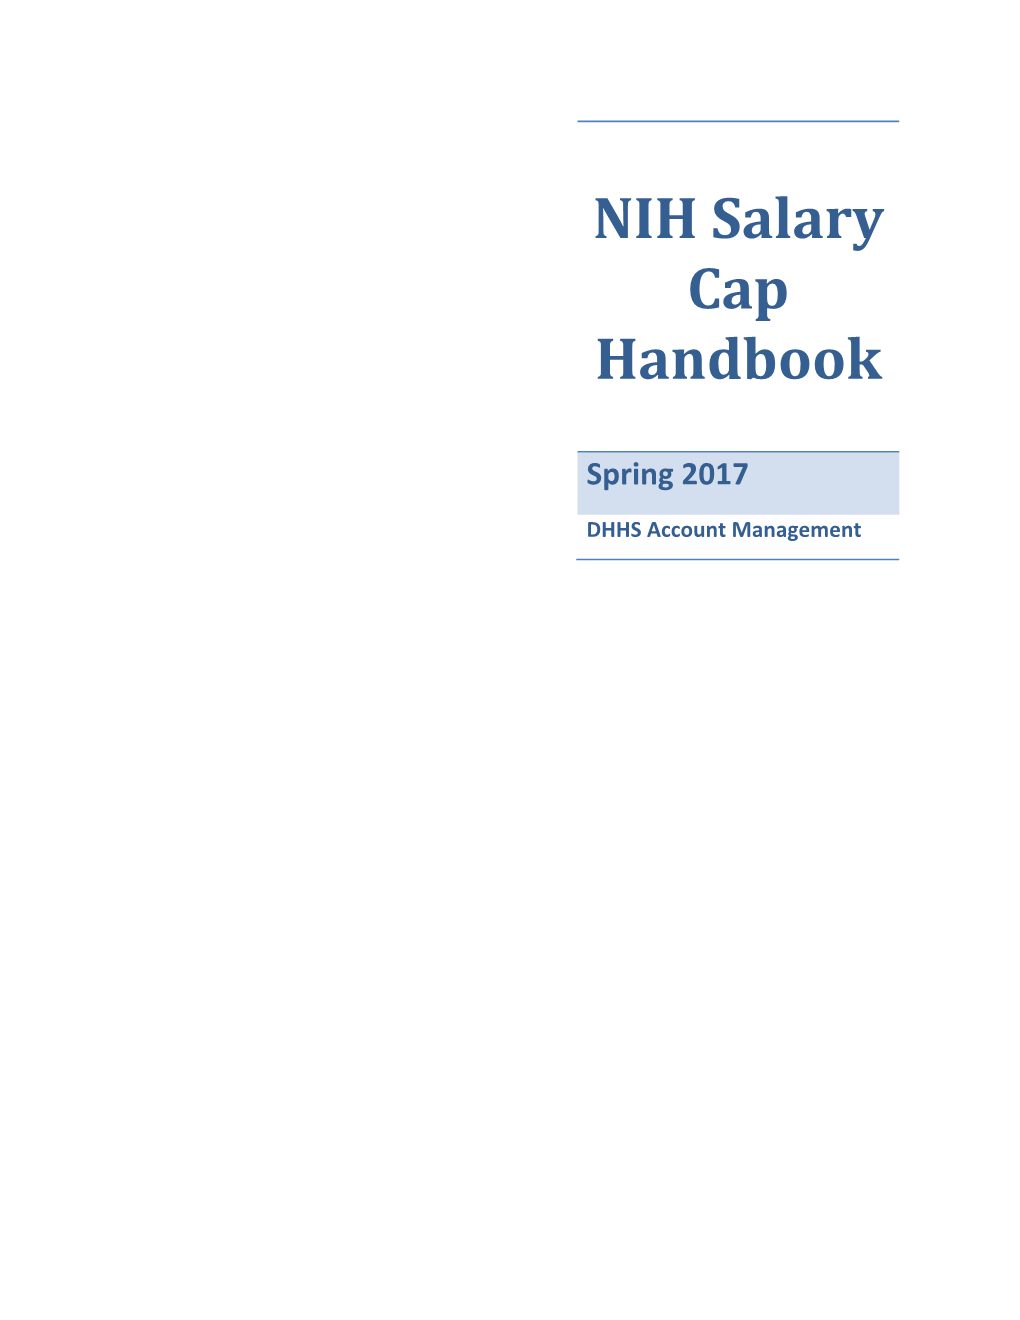 NIH Salary Cap Handbook